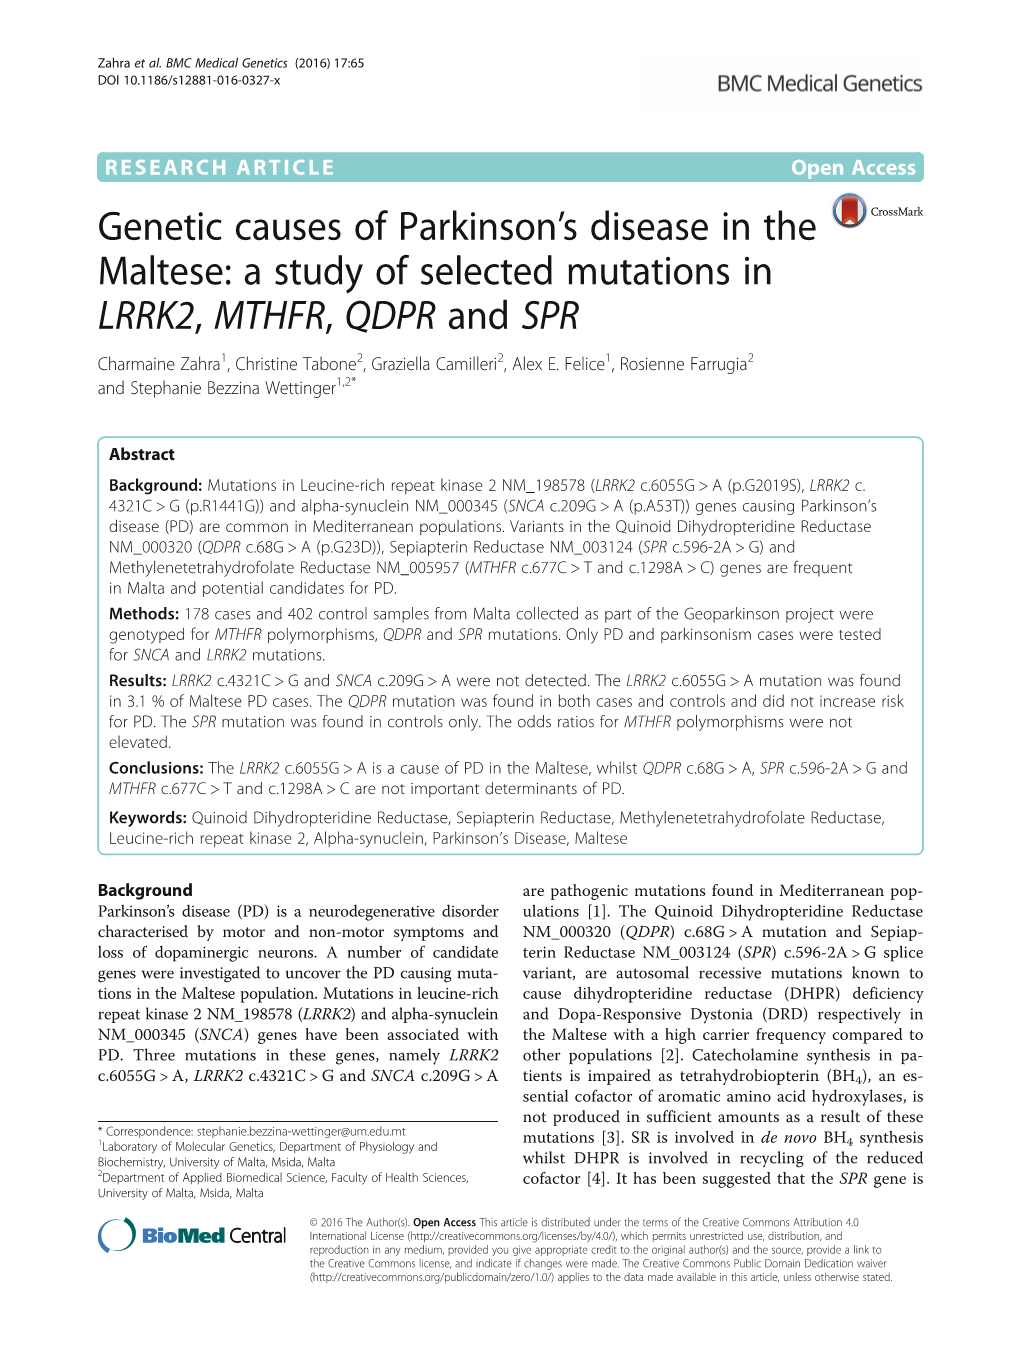 A Study of Selected Mutations in LRRK2, MTHFR, QDPR and SPR Charmaine Zahra1, Christine Tabone2, Graziella Camilleri2, Alex E